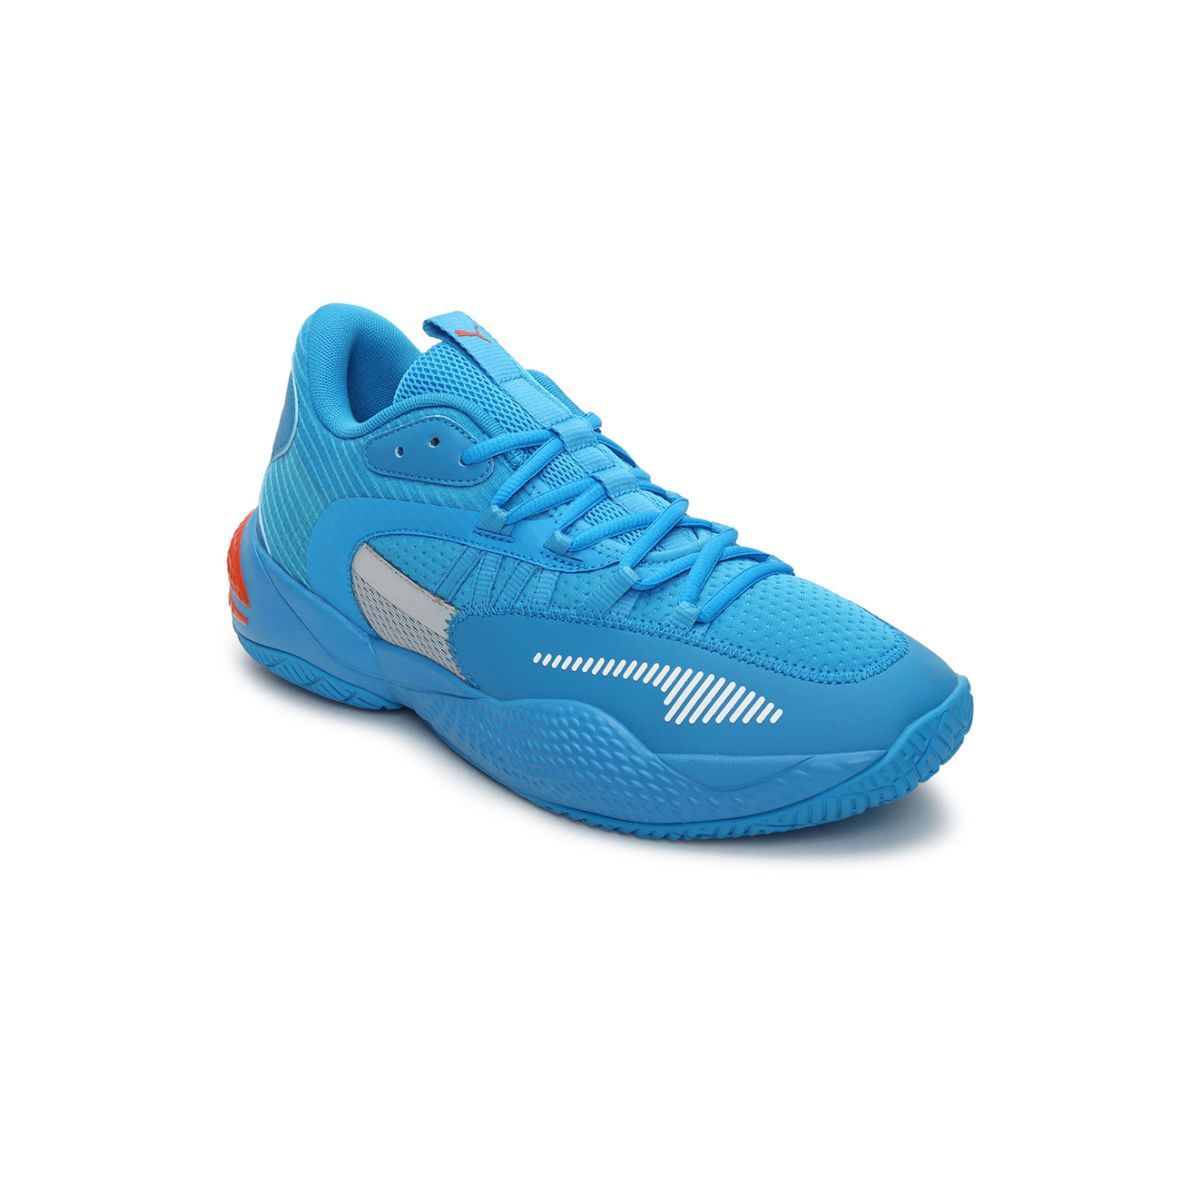 Puma Court Rider 2.0 Blue Basketball Shoes (UK 7): Buy Puma Court Rider ...